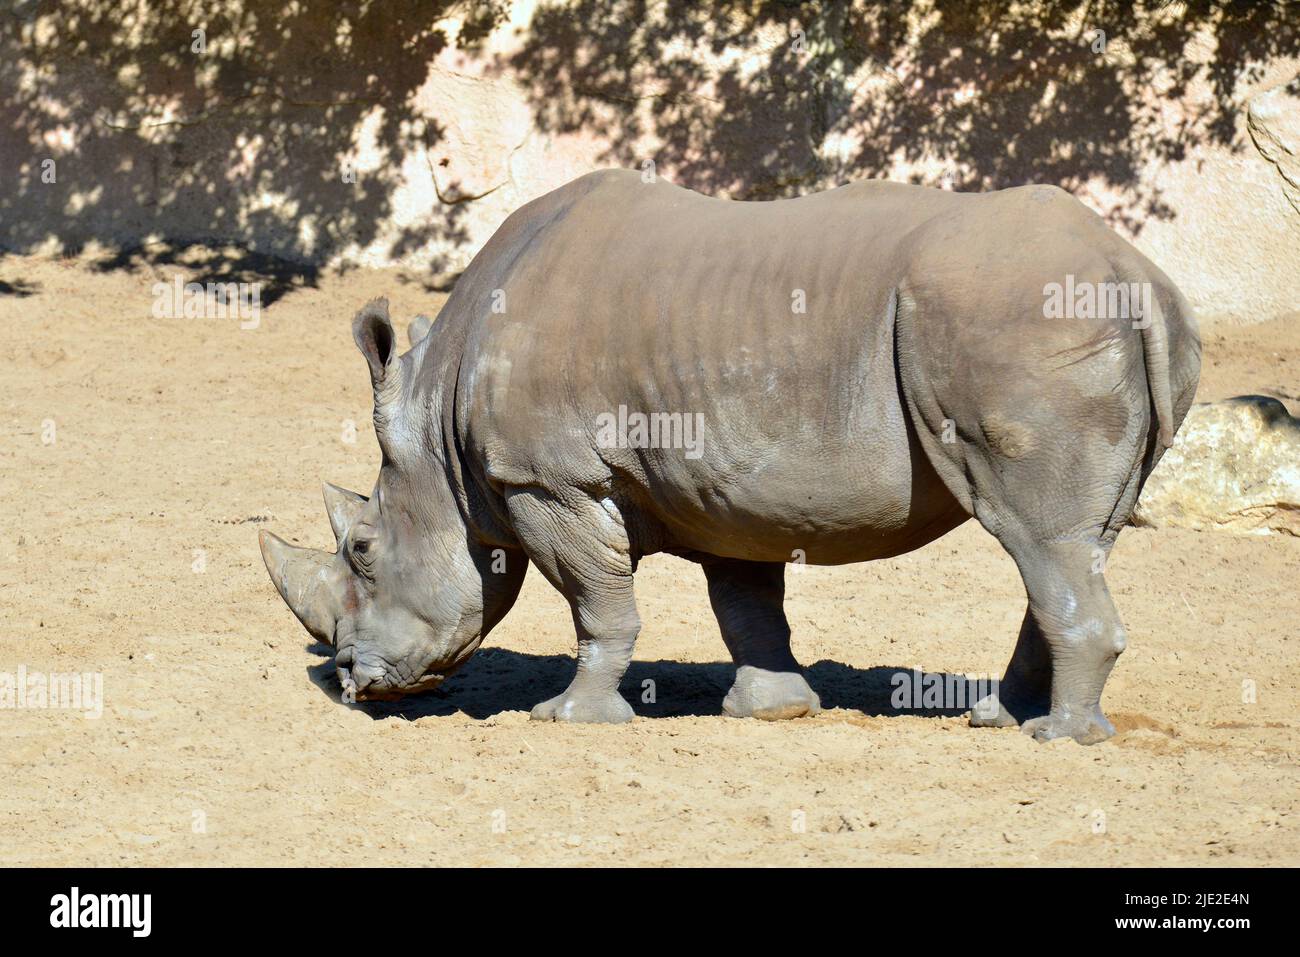 White rhinoceros or square-lipped rhinoceros (Ceratotherium simum) standing on sand Stock Photo